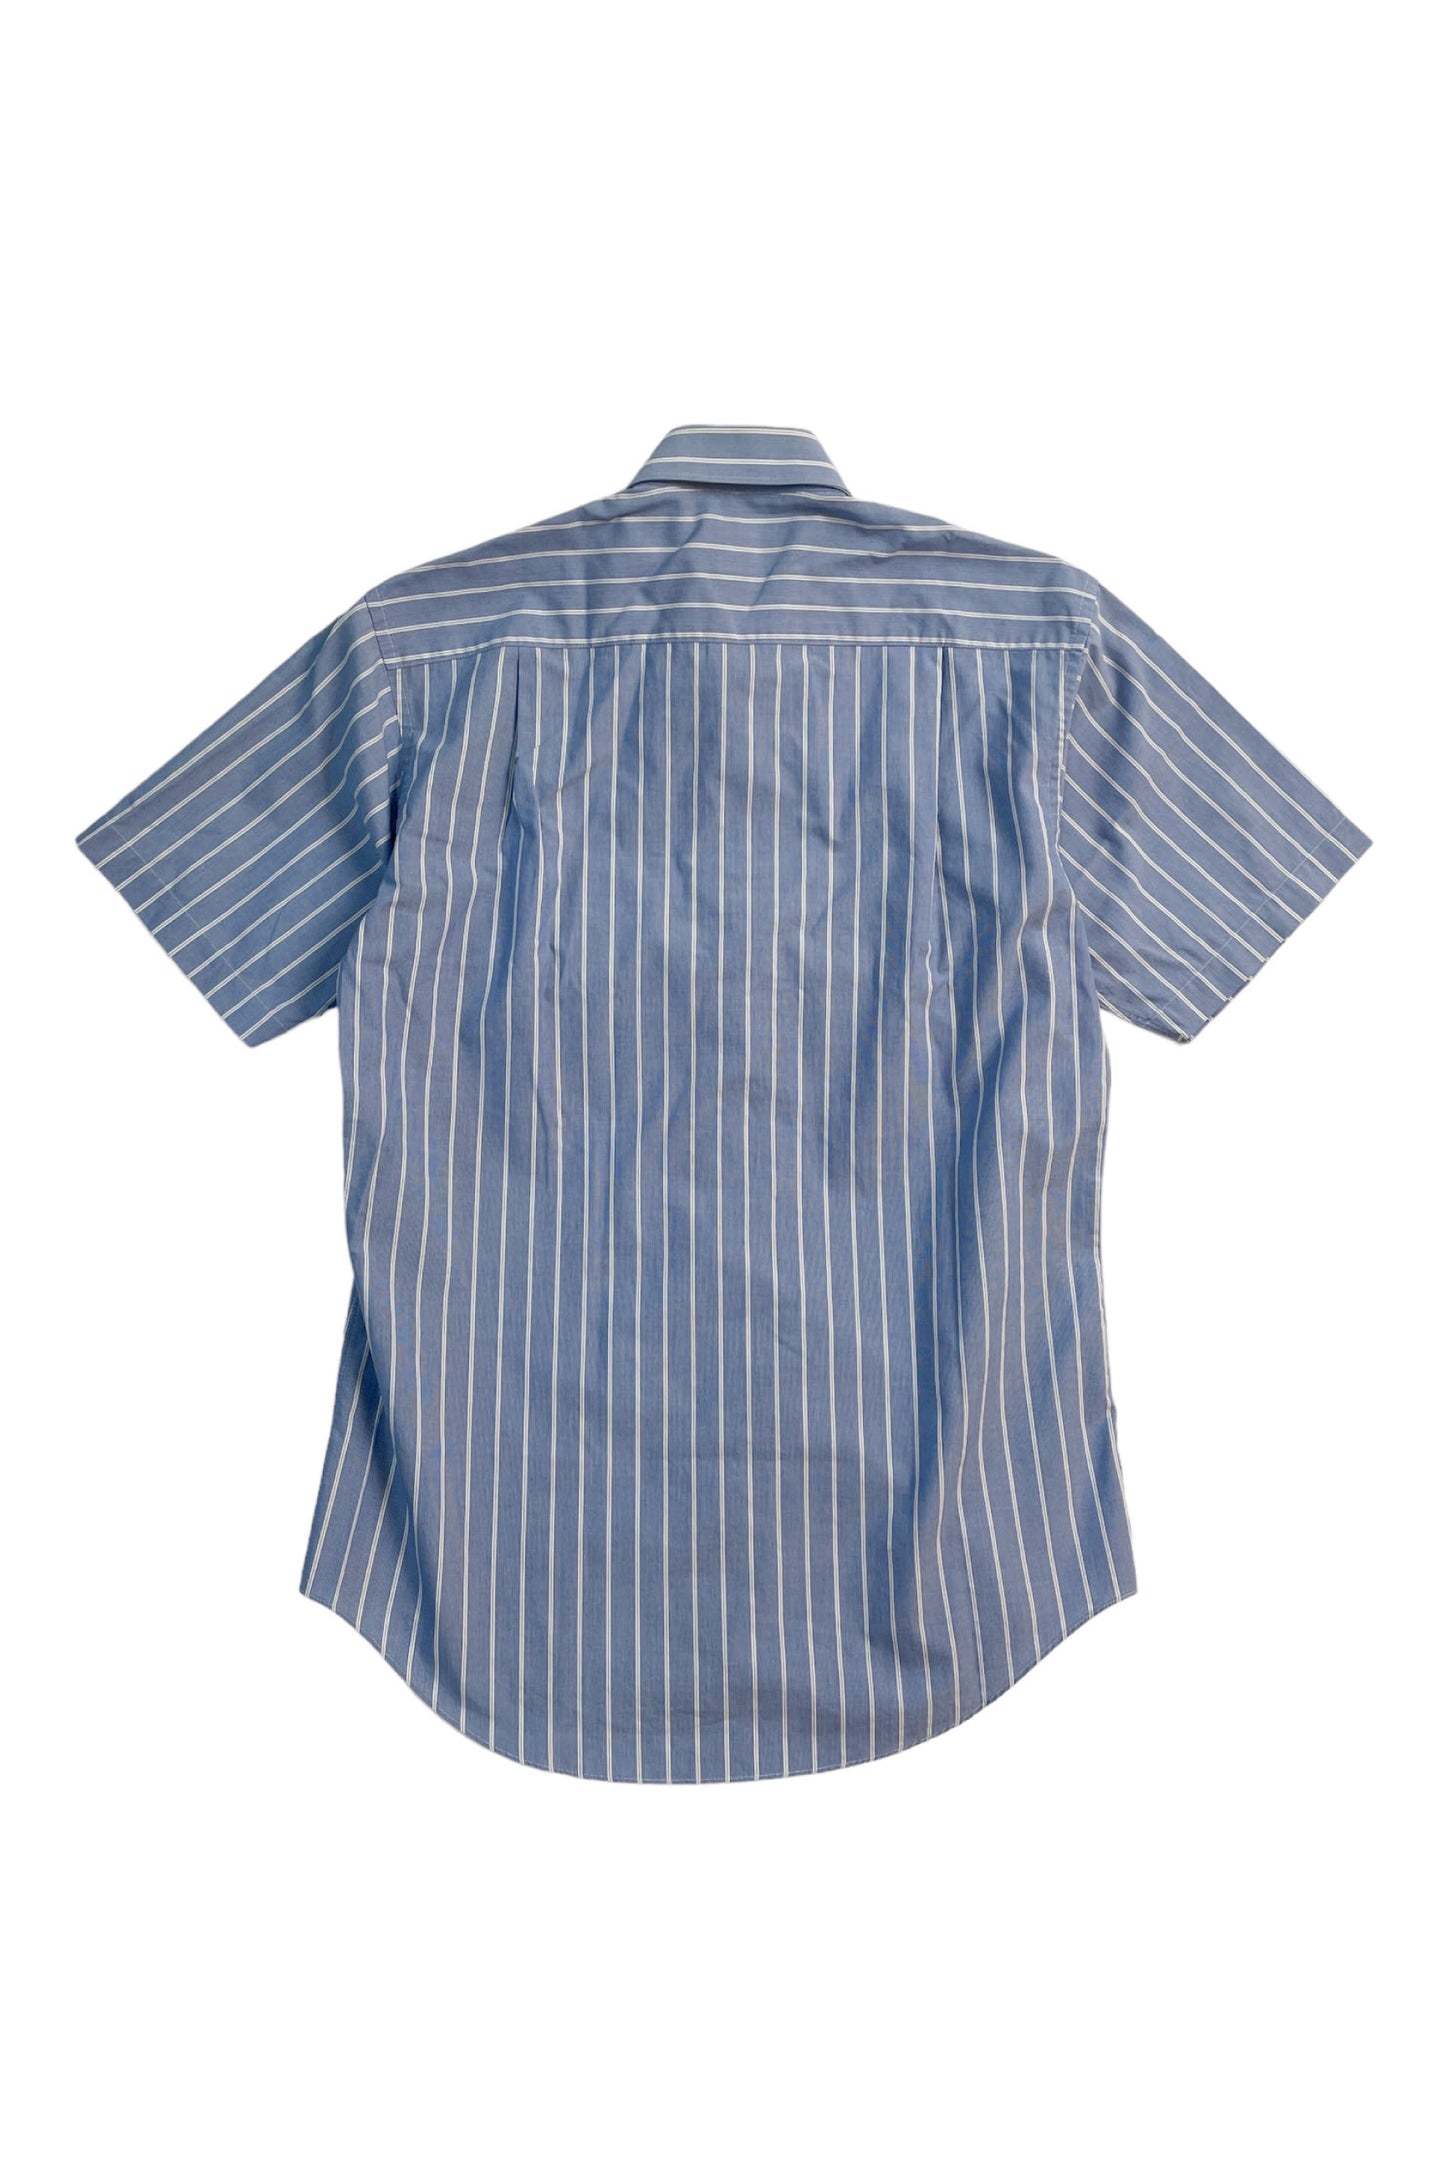 90's KANSAI MAN stripe shirt